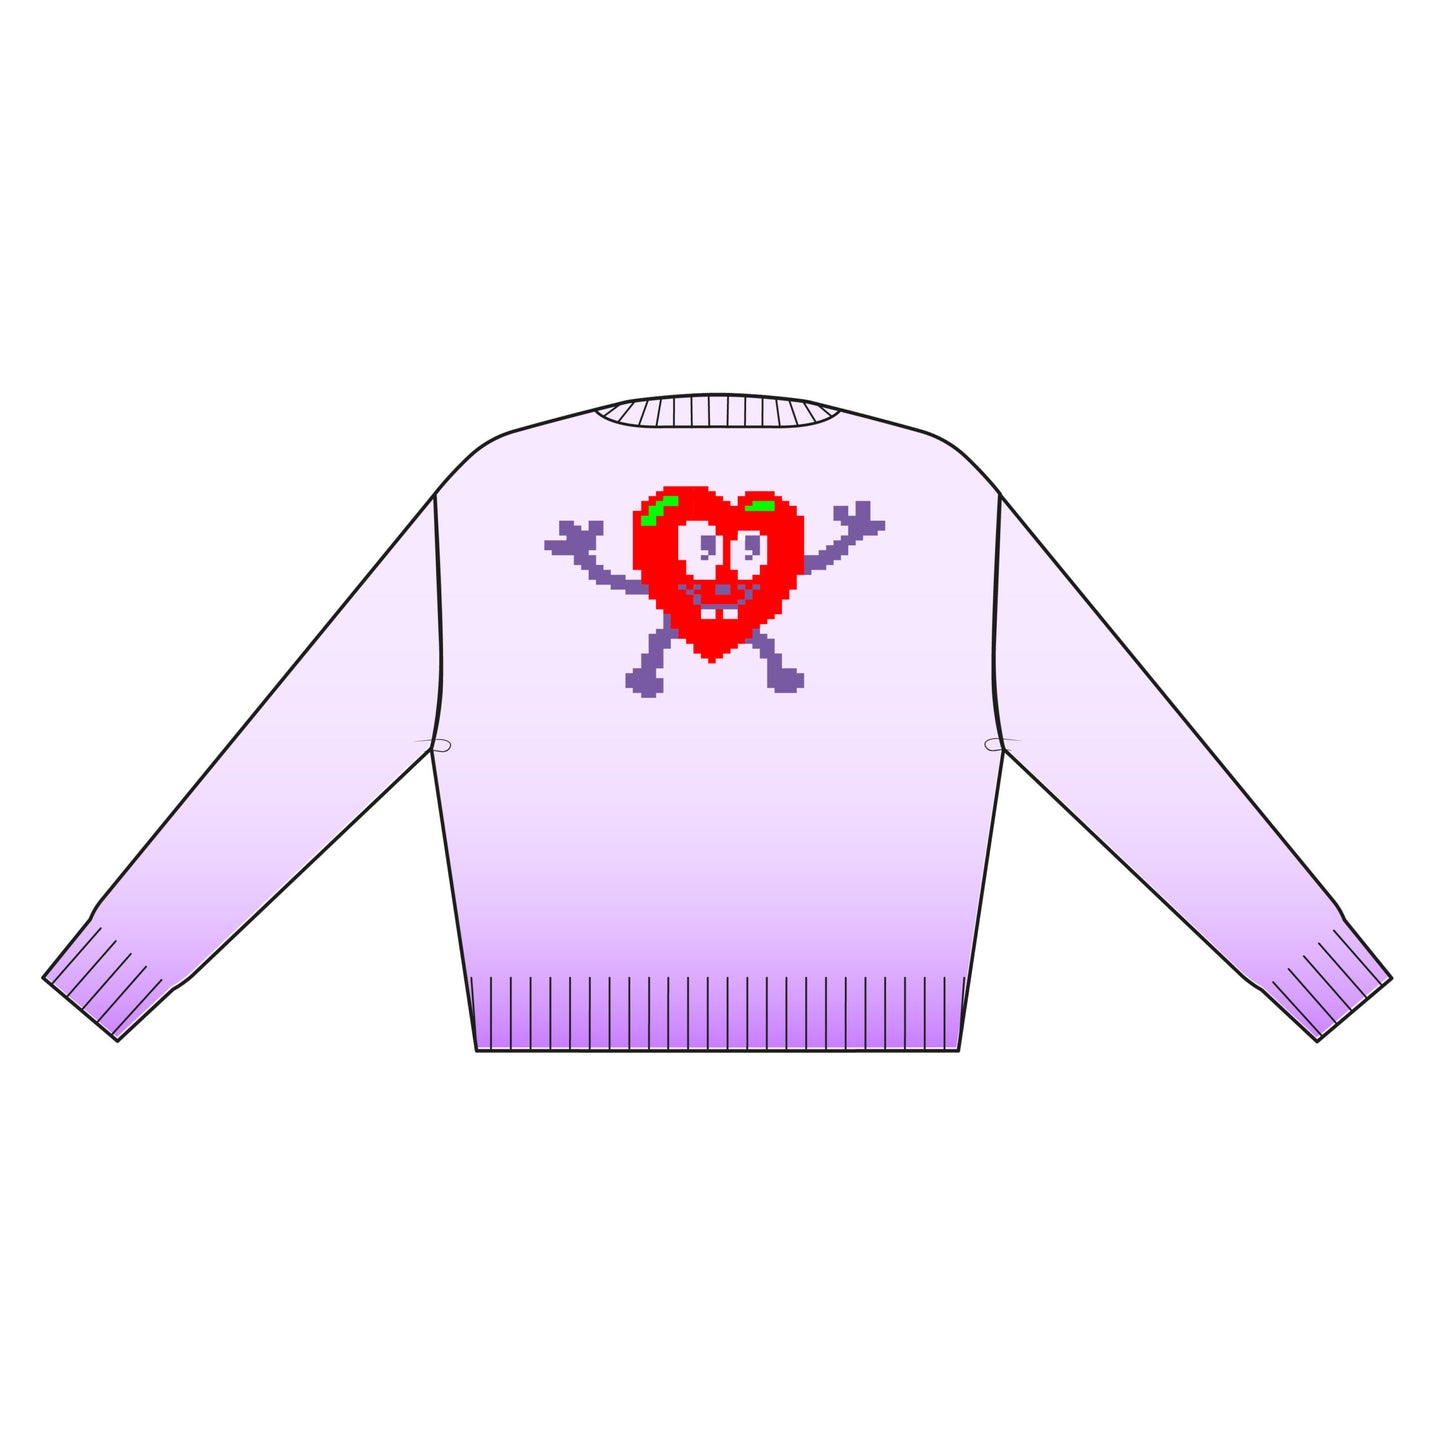 Knit Bitch Sweater